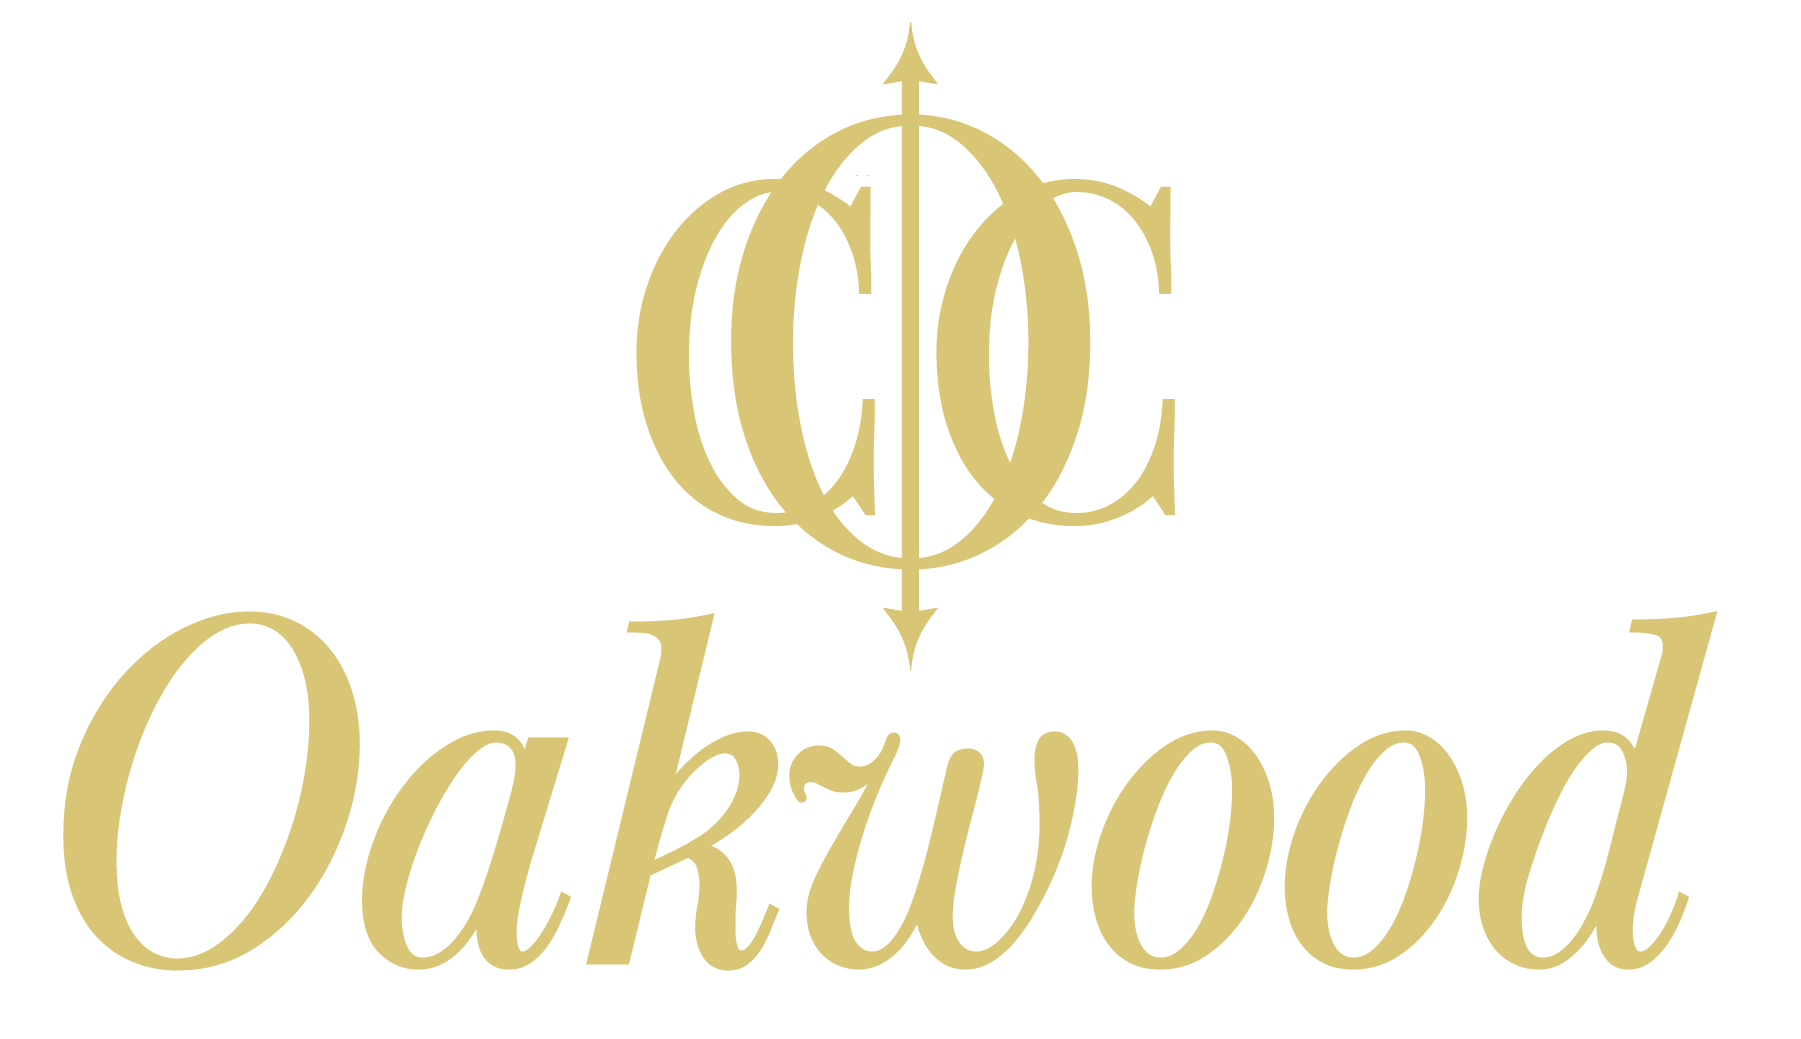 Oakwood Country Club